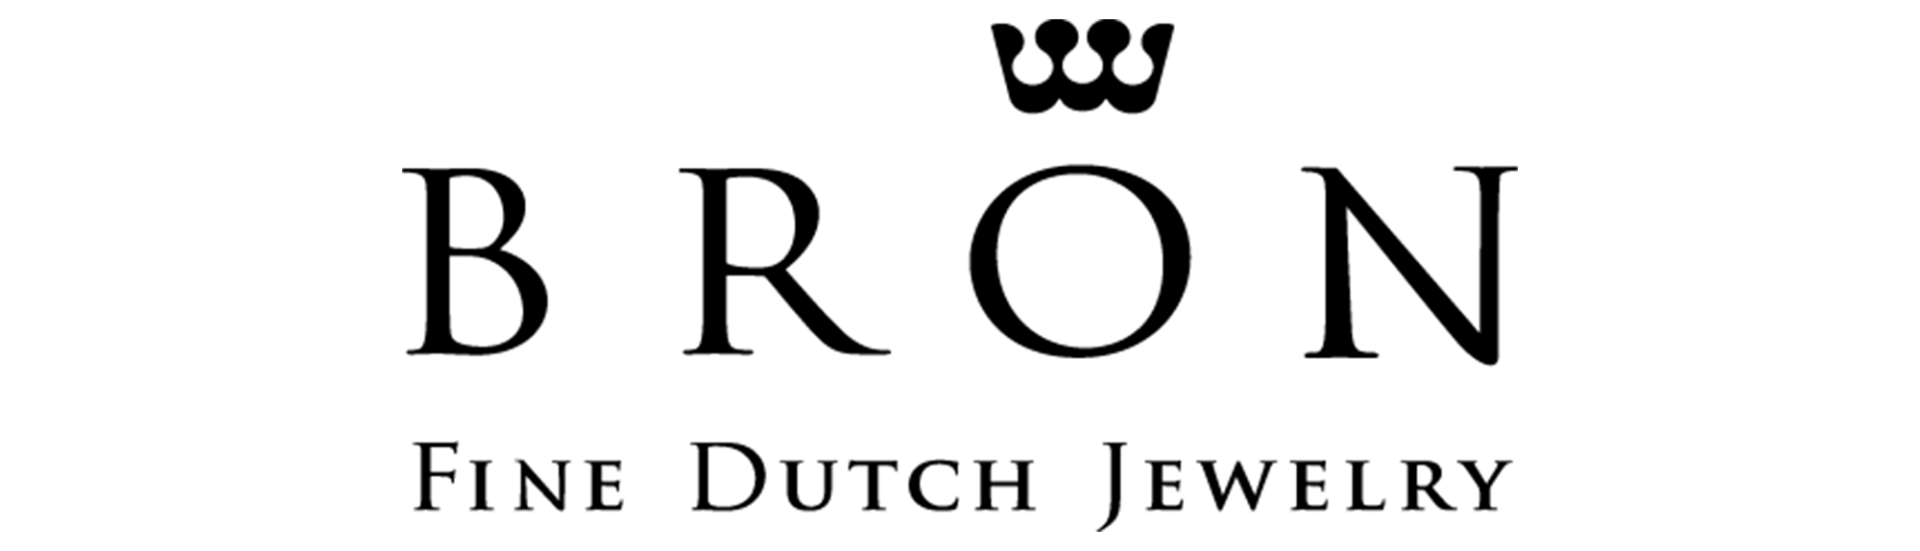 bron-logo